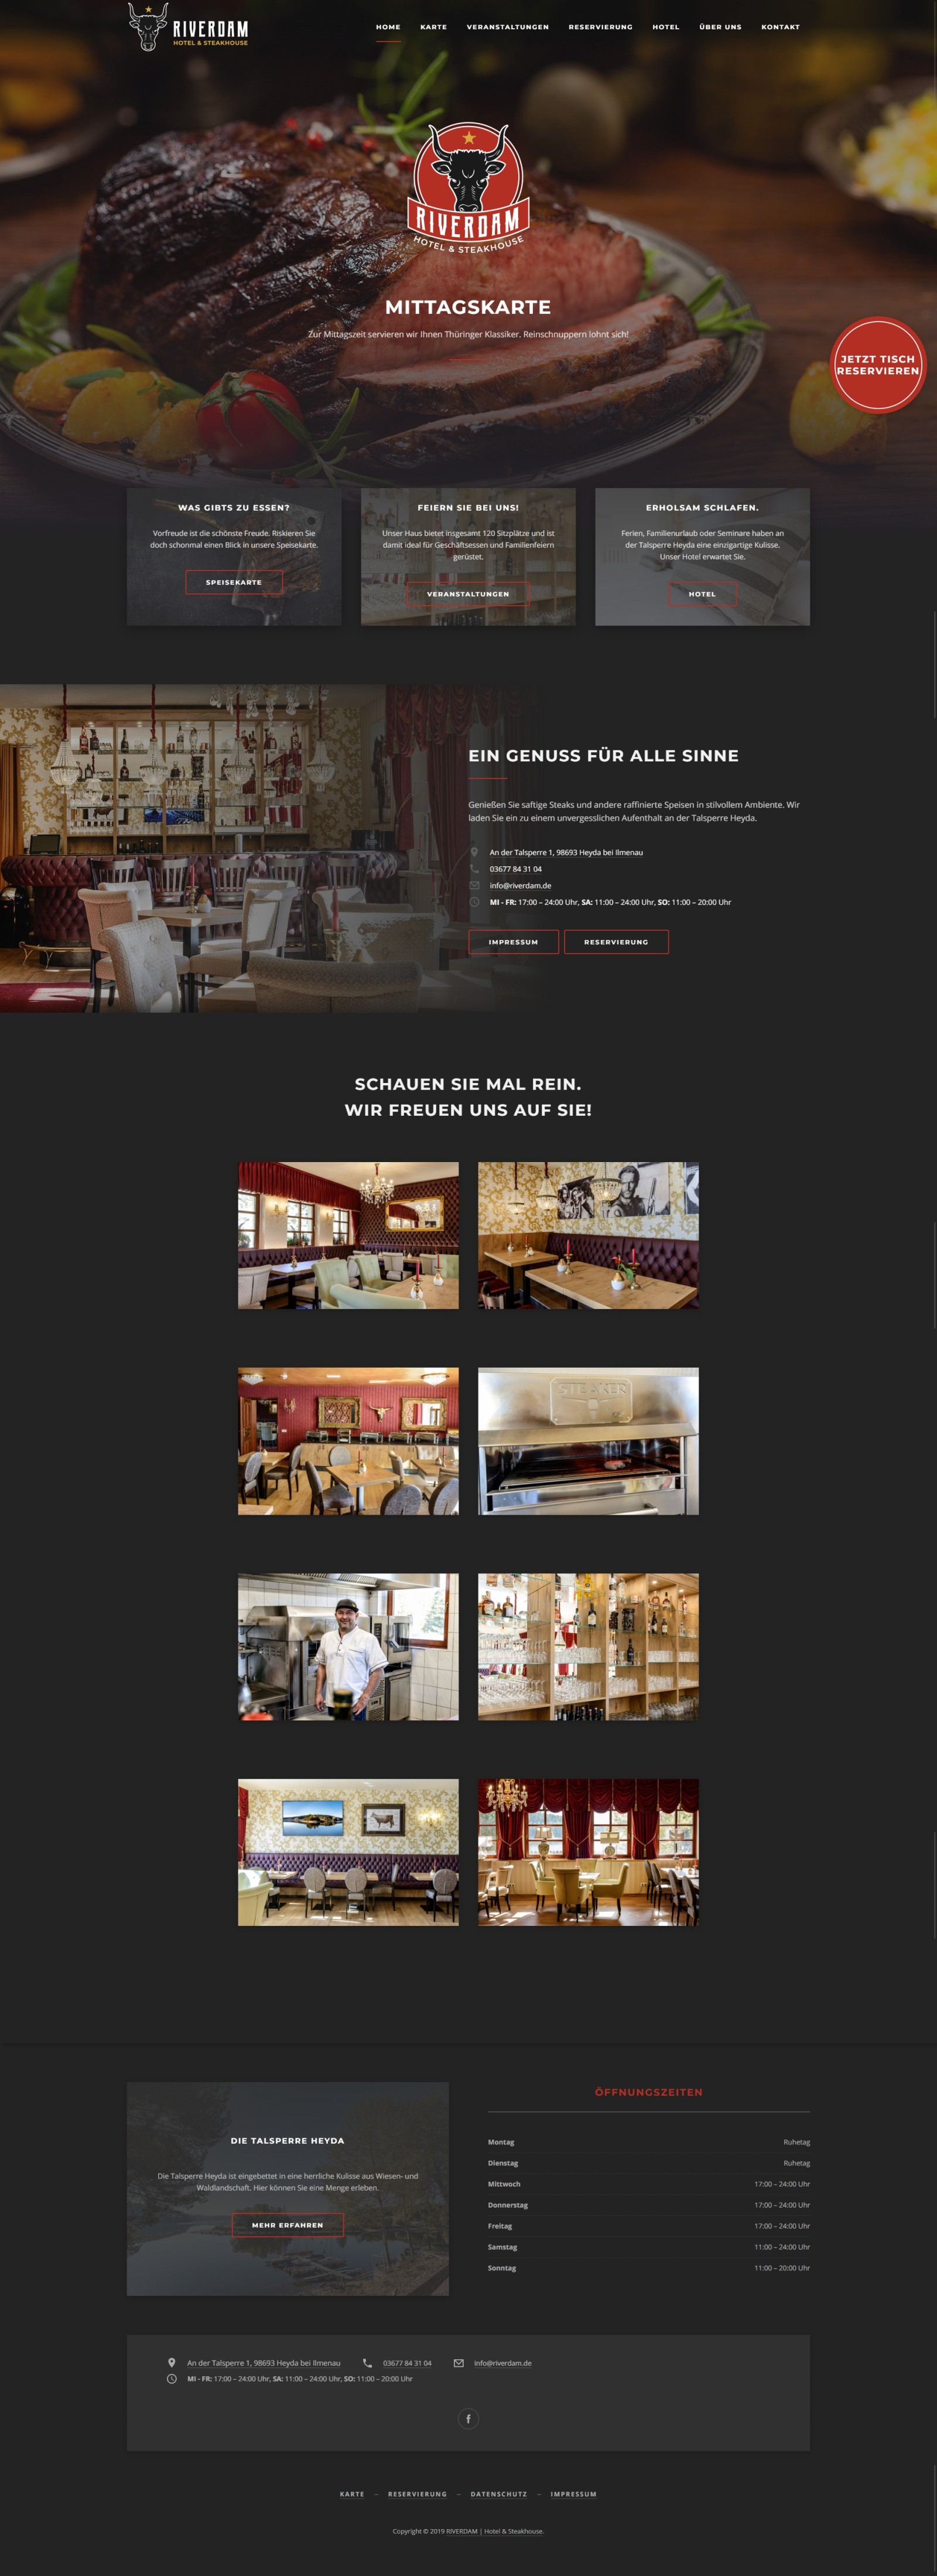 Riverdam Hotel & Steakhouse Website